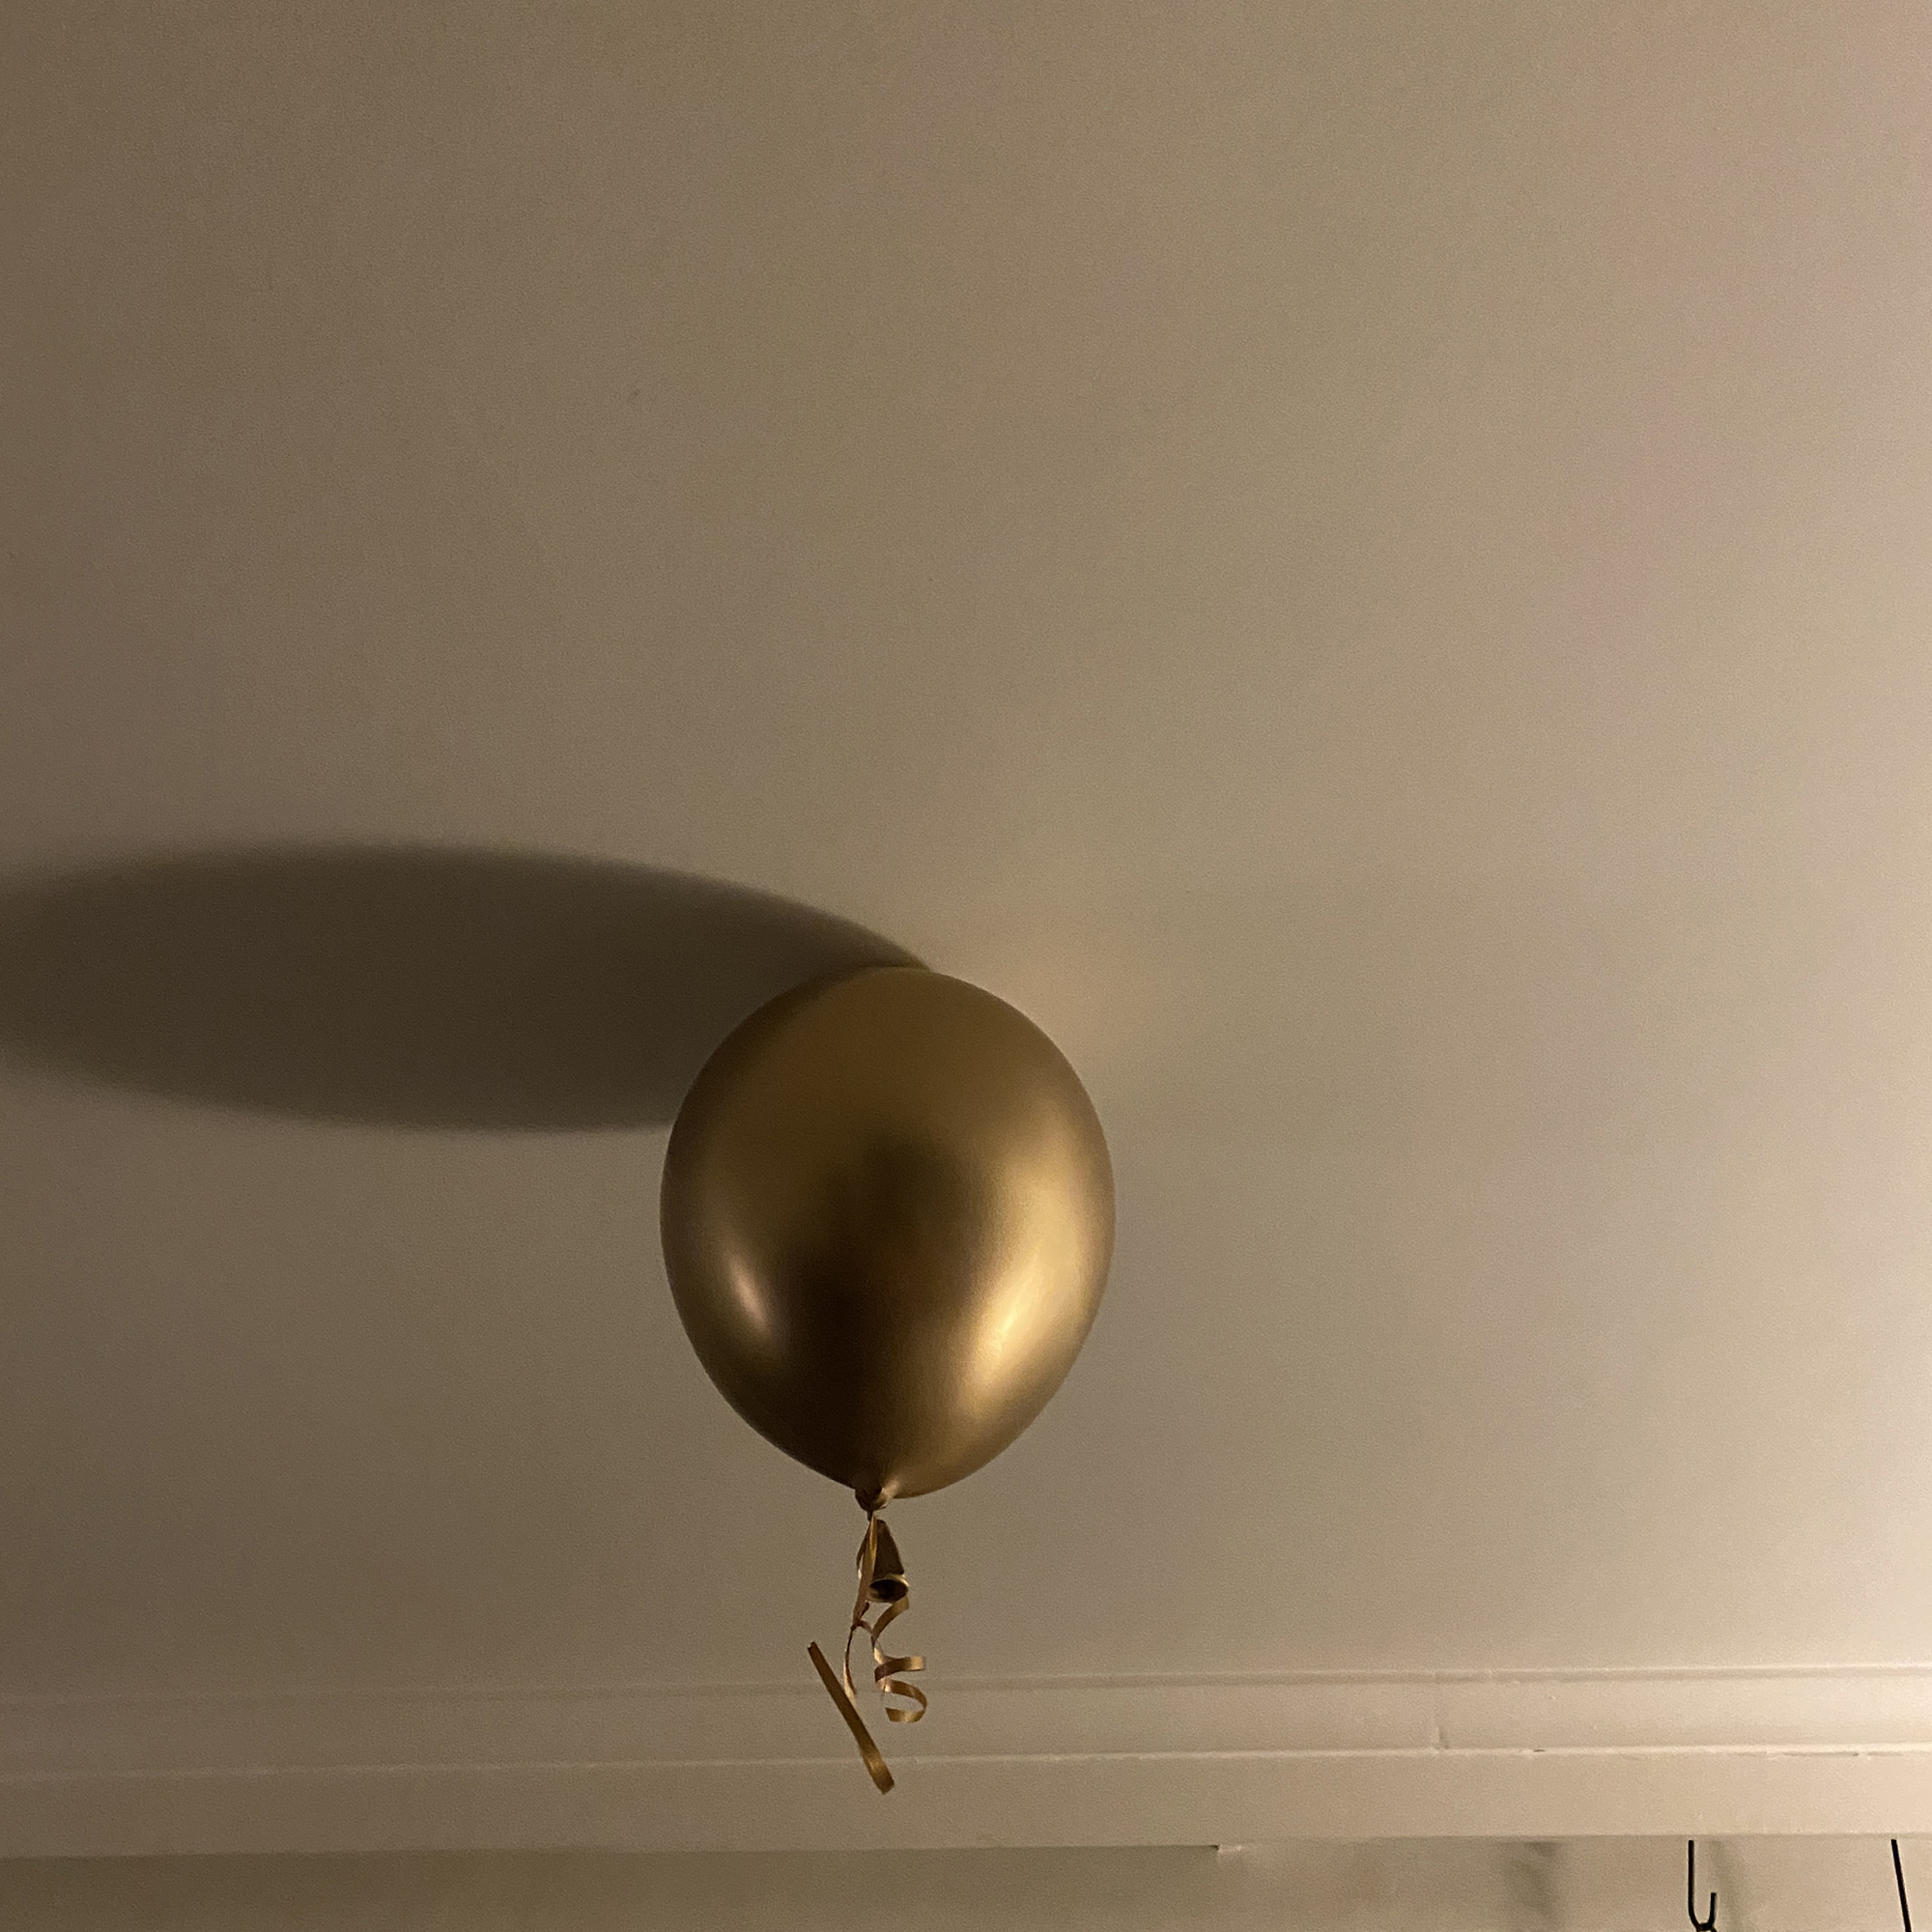 birthday balloon - 47 years young